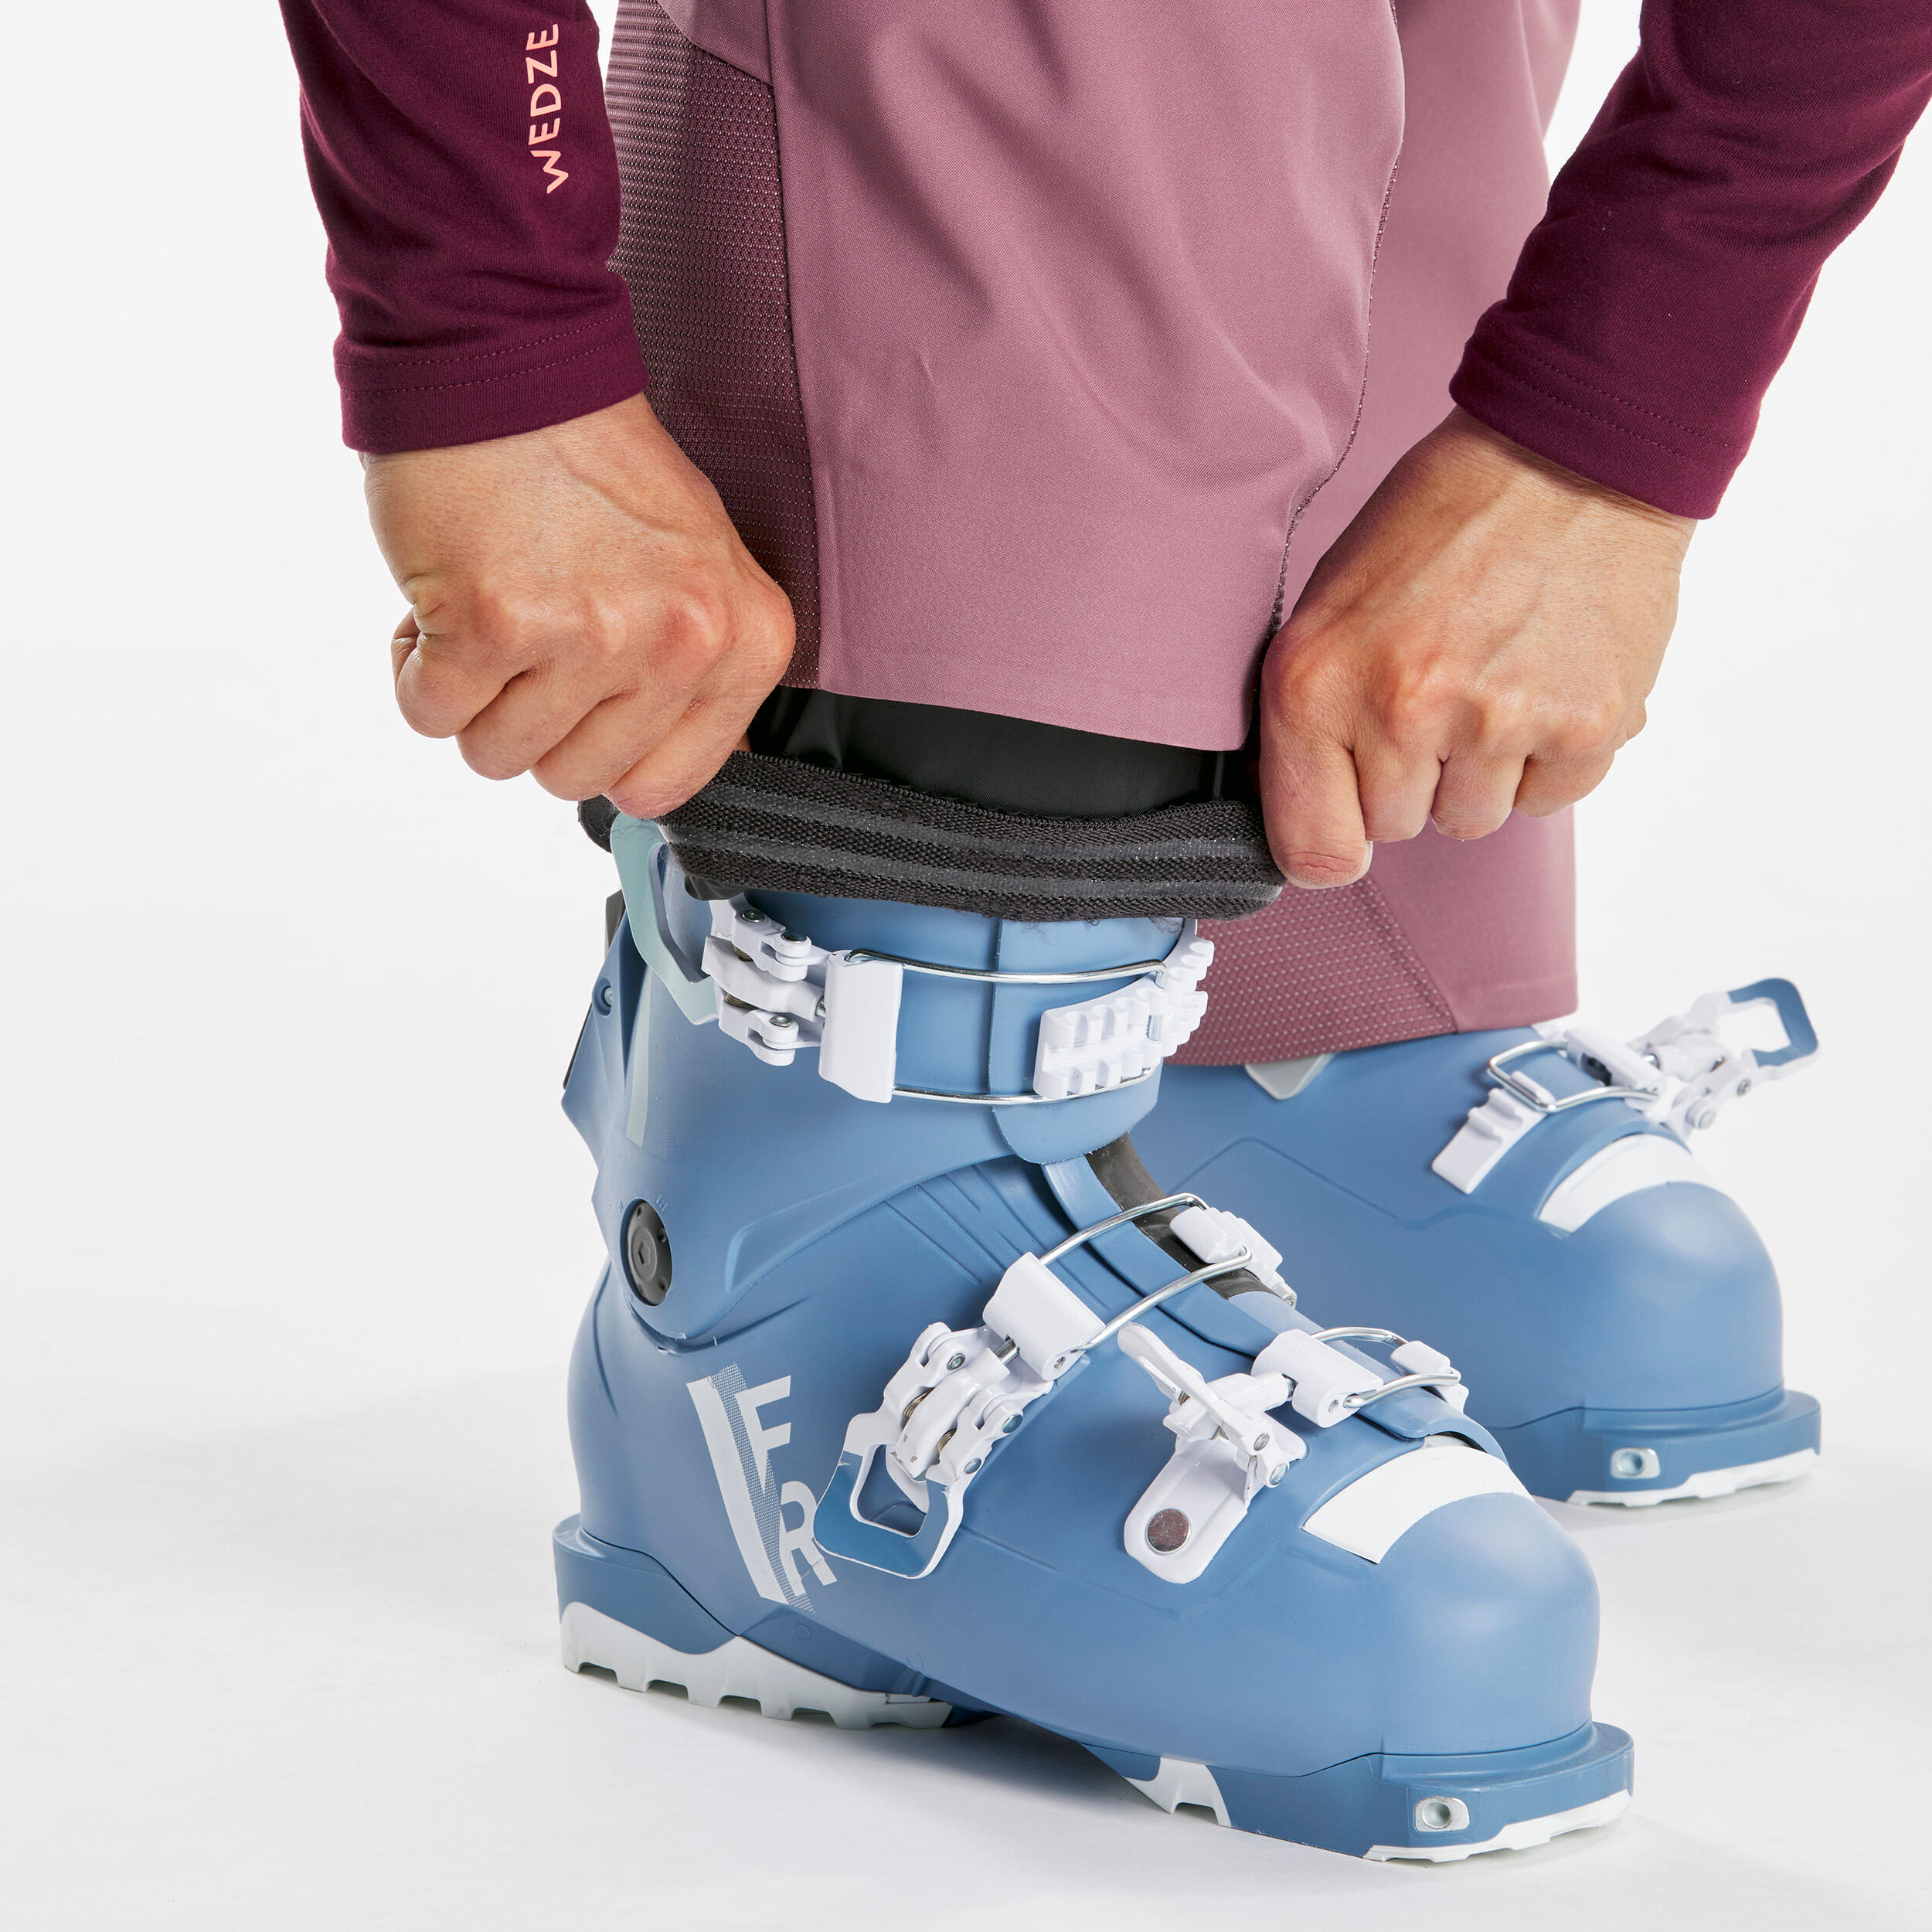 Women’s Ski Pants – FR 500 Pink - WEDZE